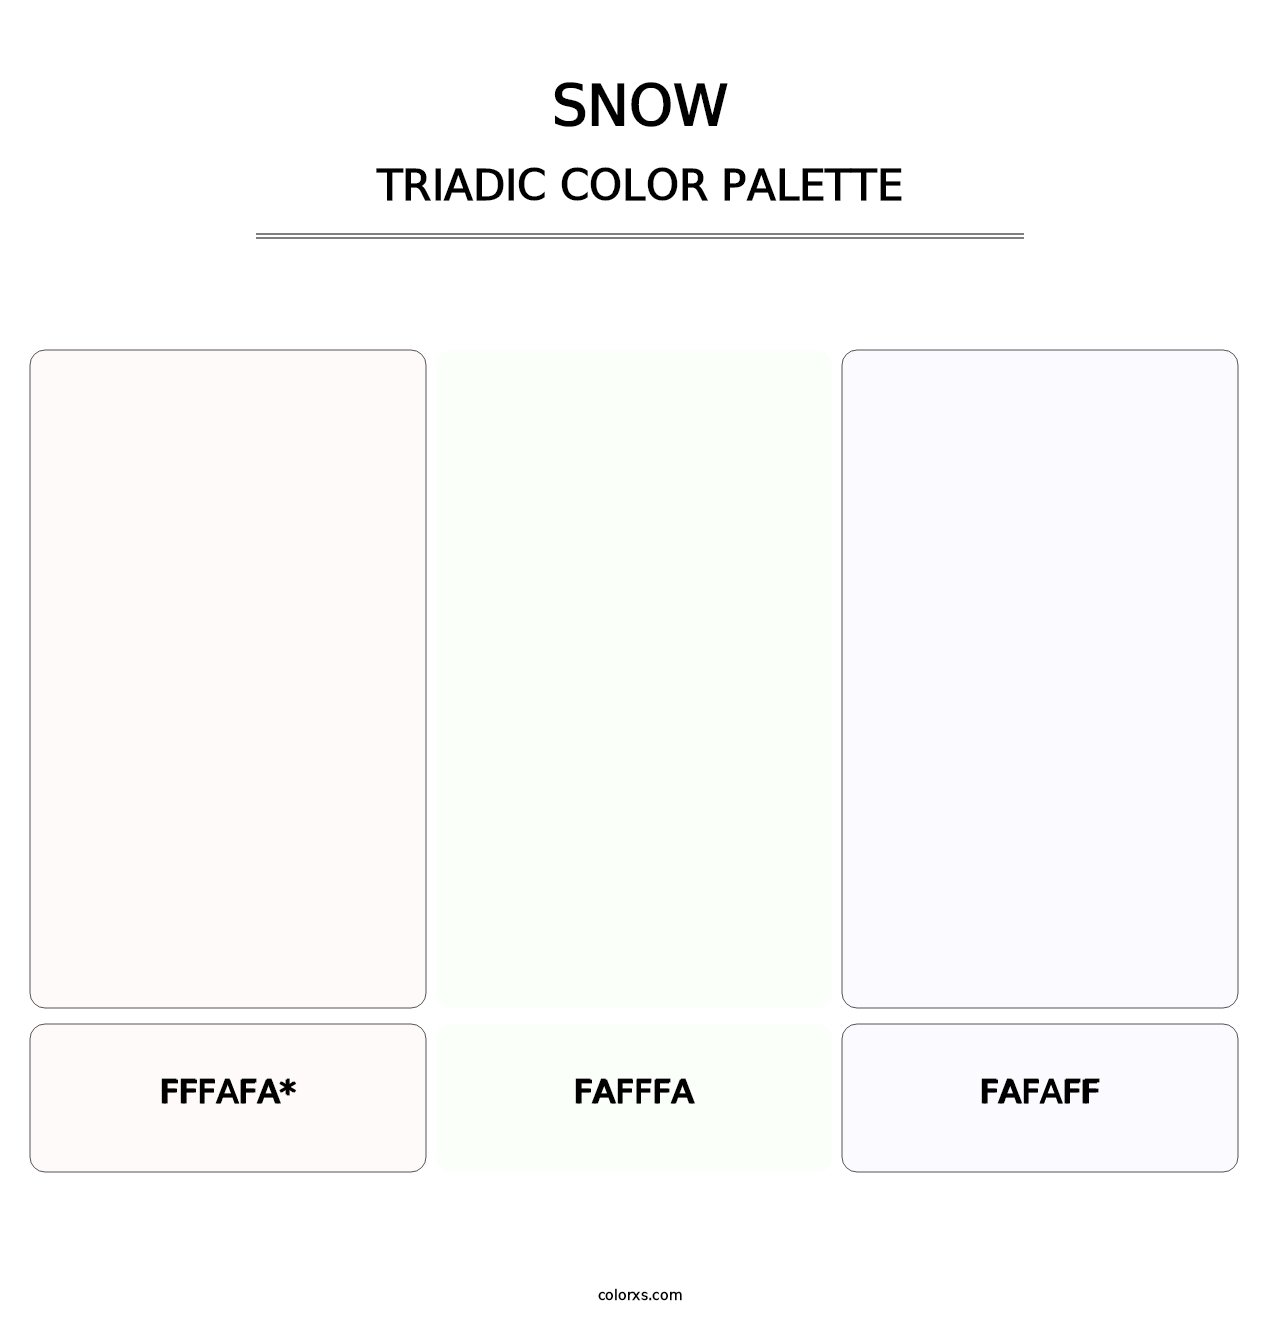 Snow - Triadic Color Palette